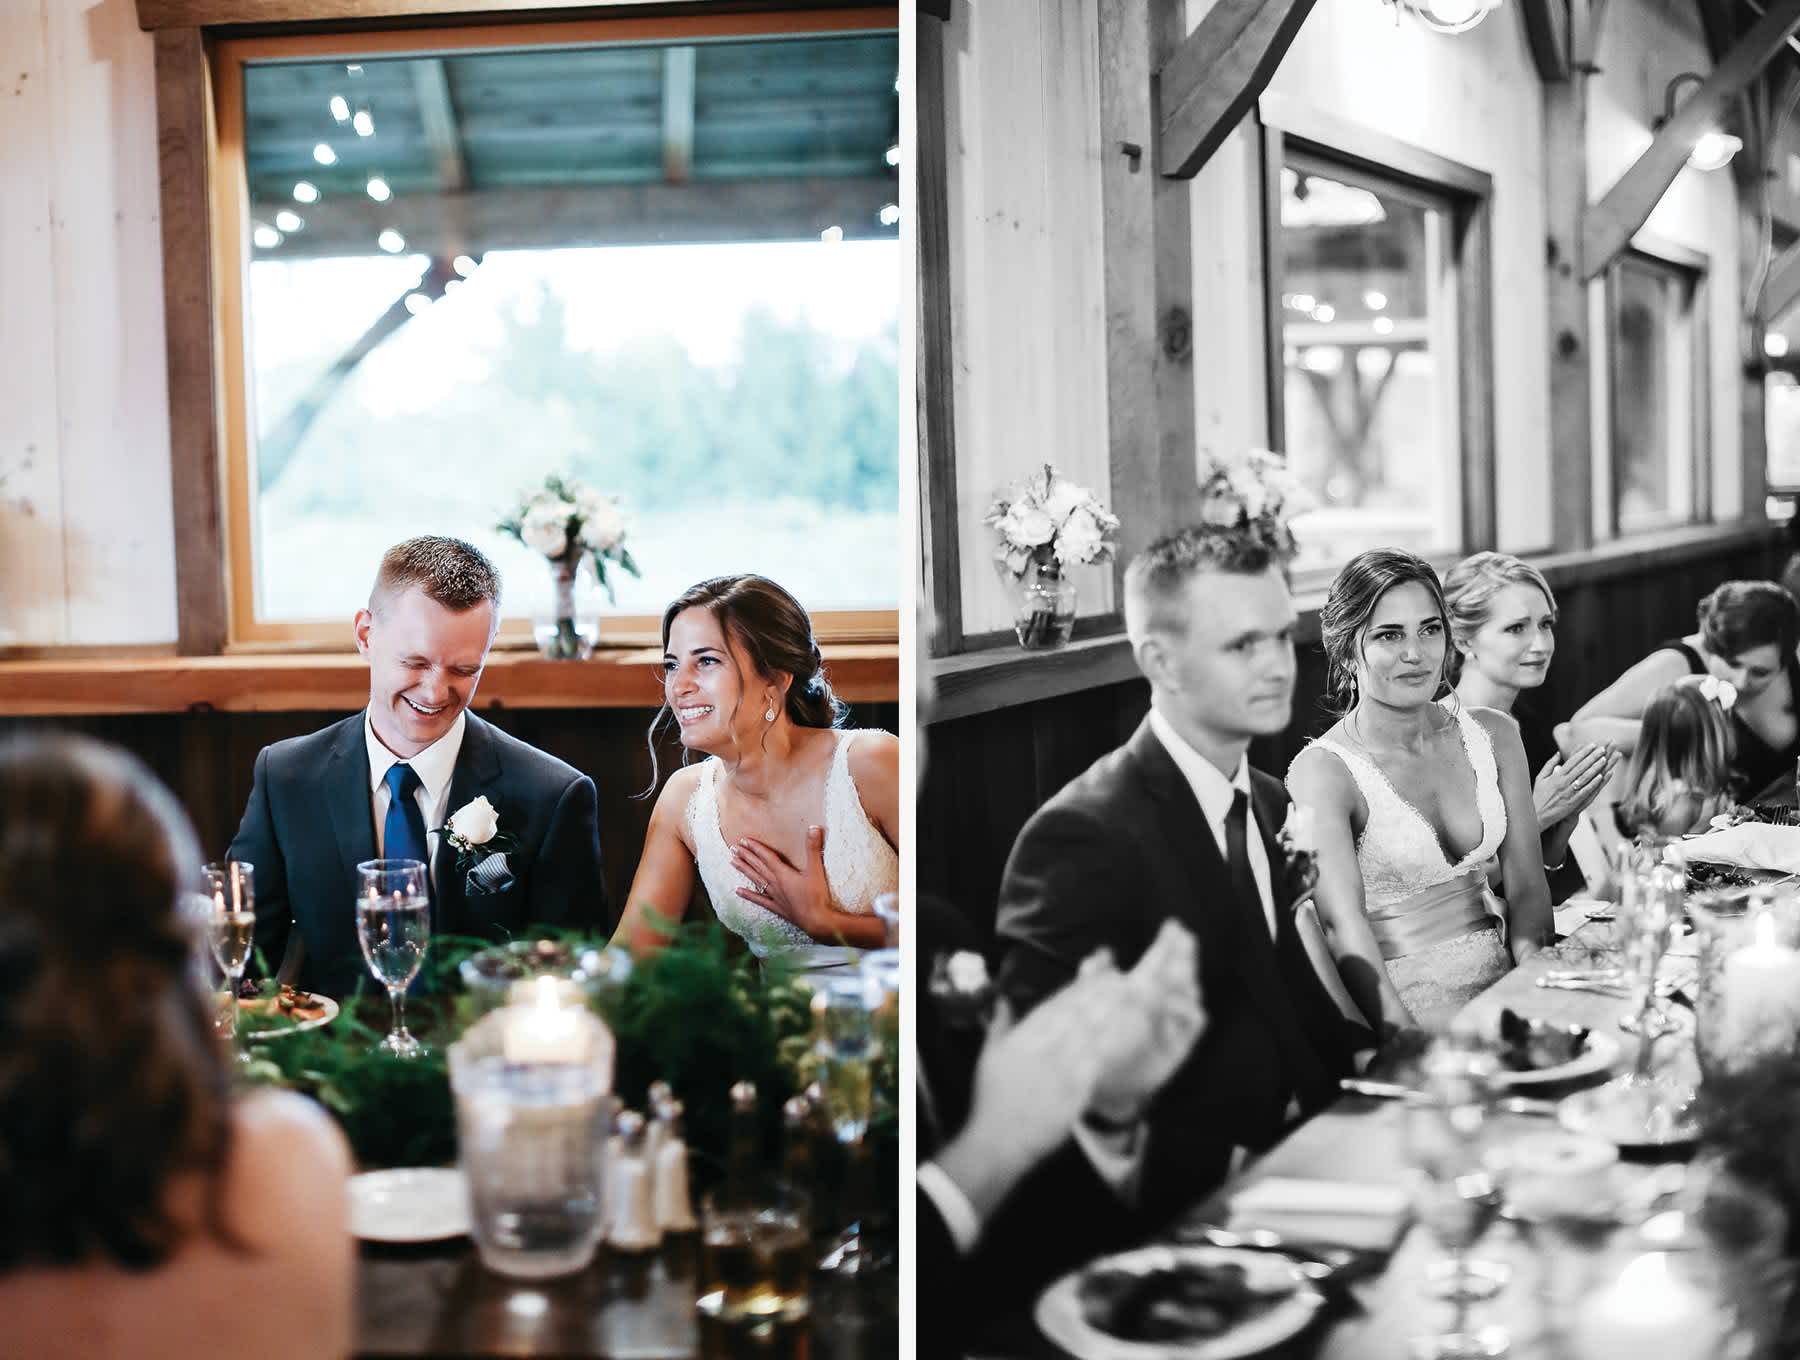 wedding-reception-toasts-reaction